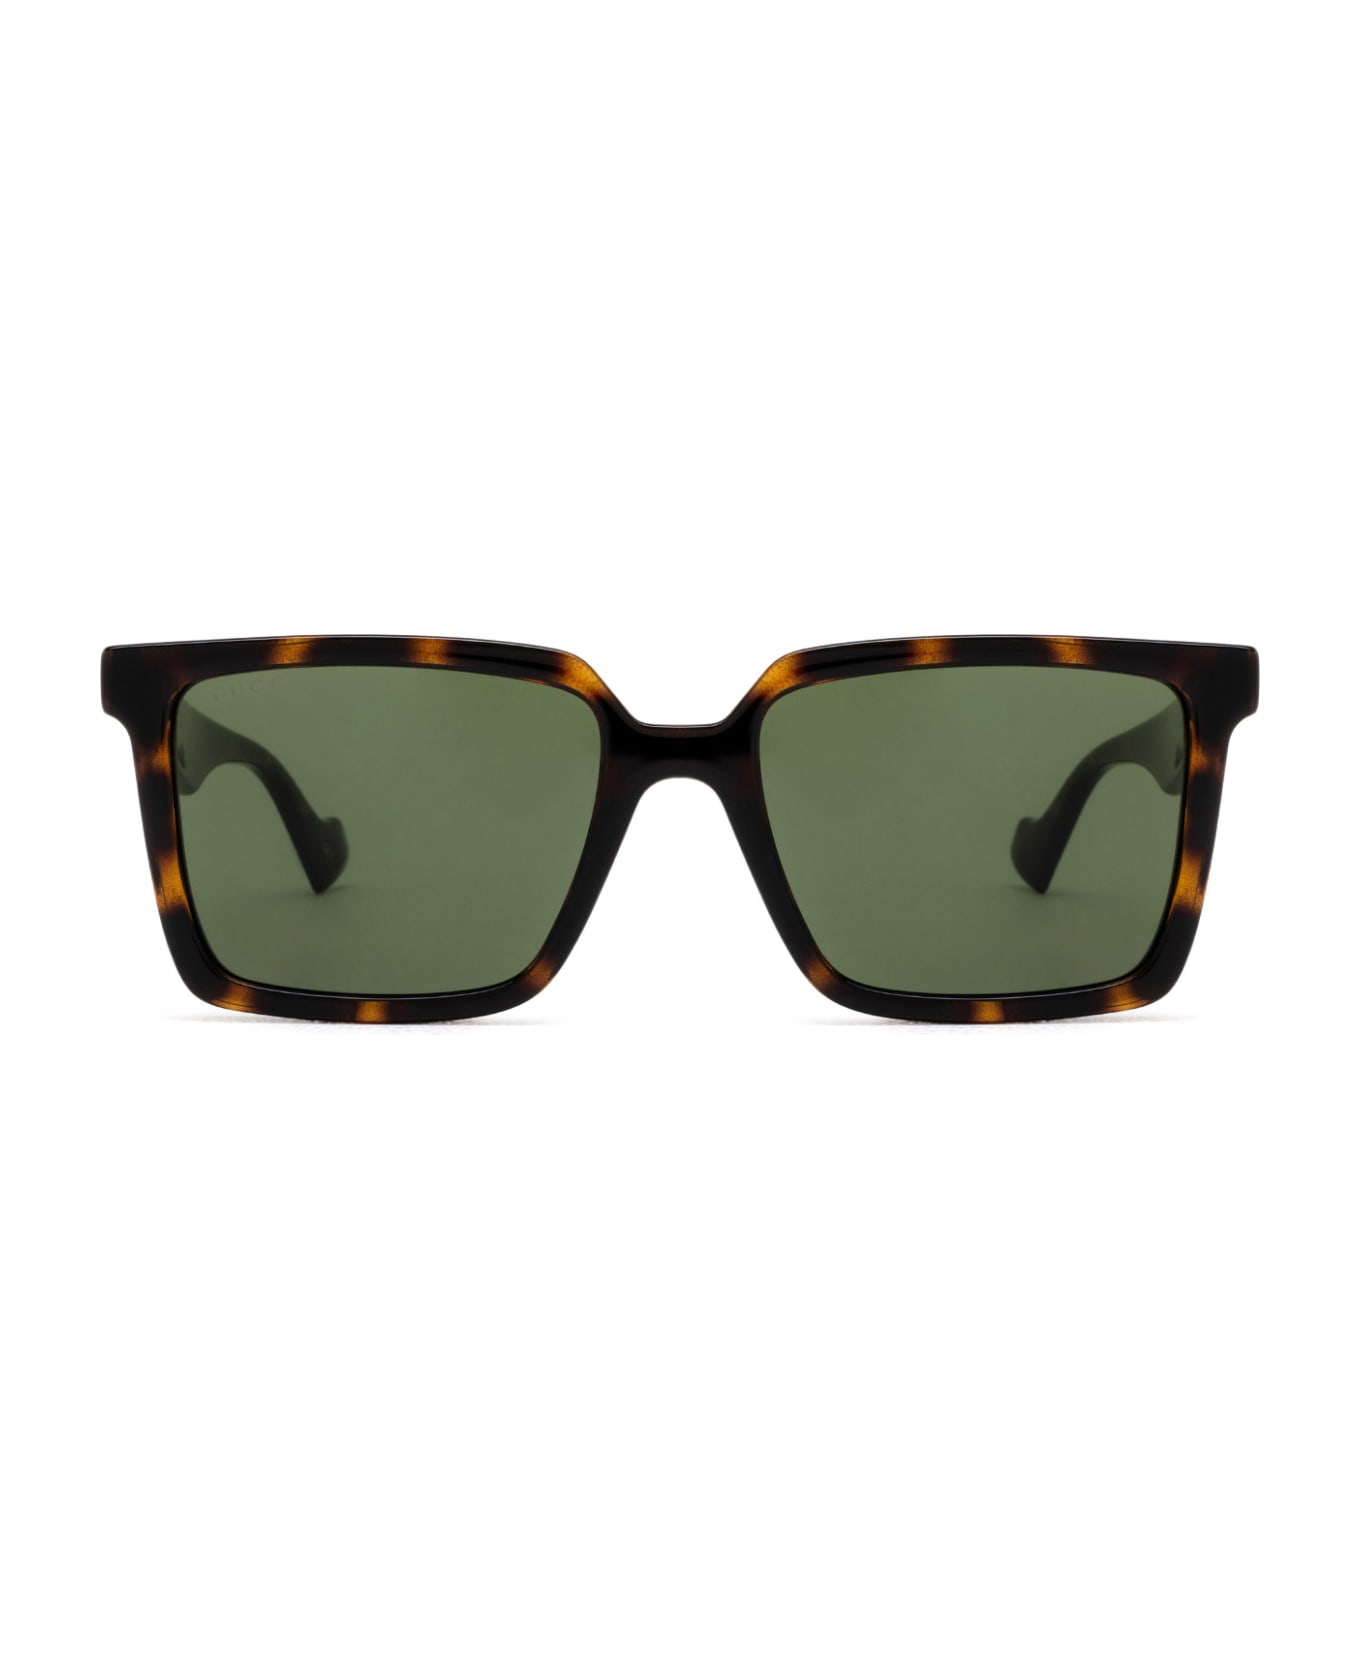 Gucci Eyewear Gg1540s Havana Sunglasses - Havana